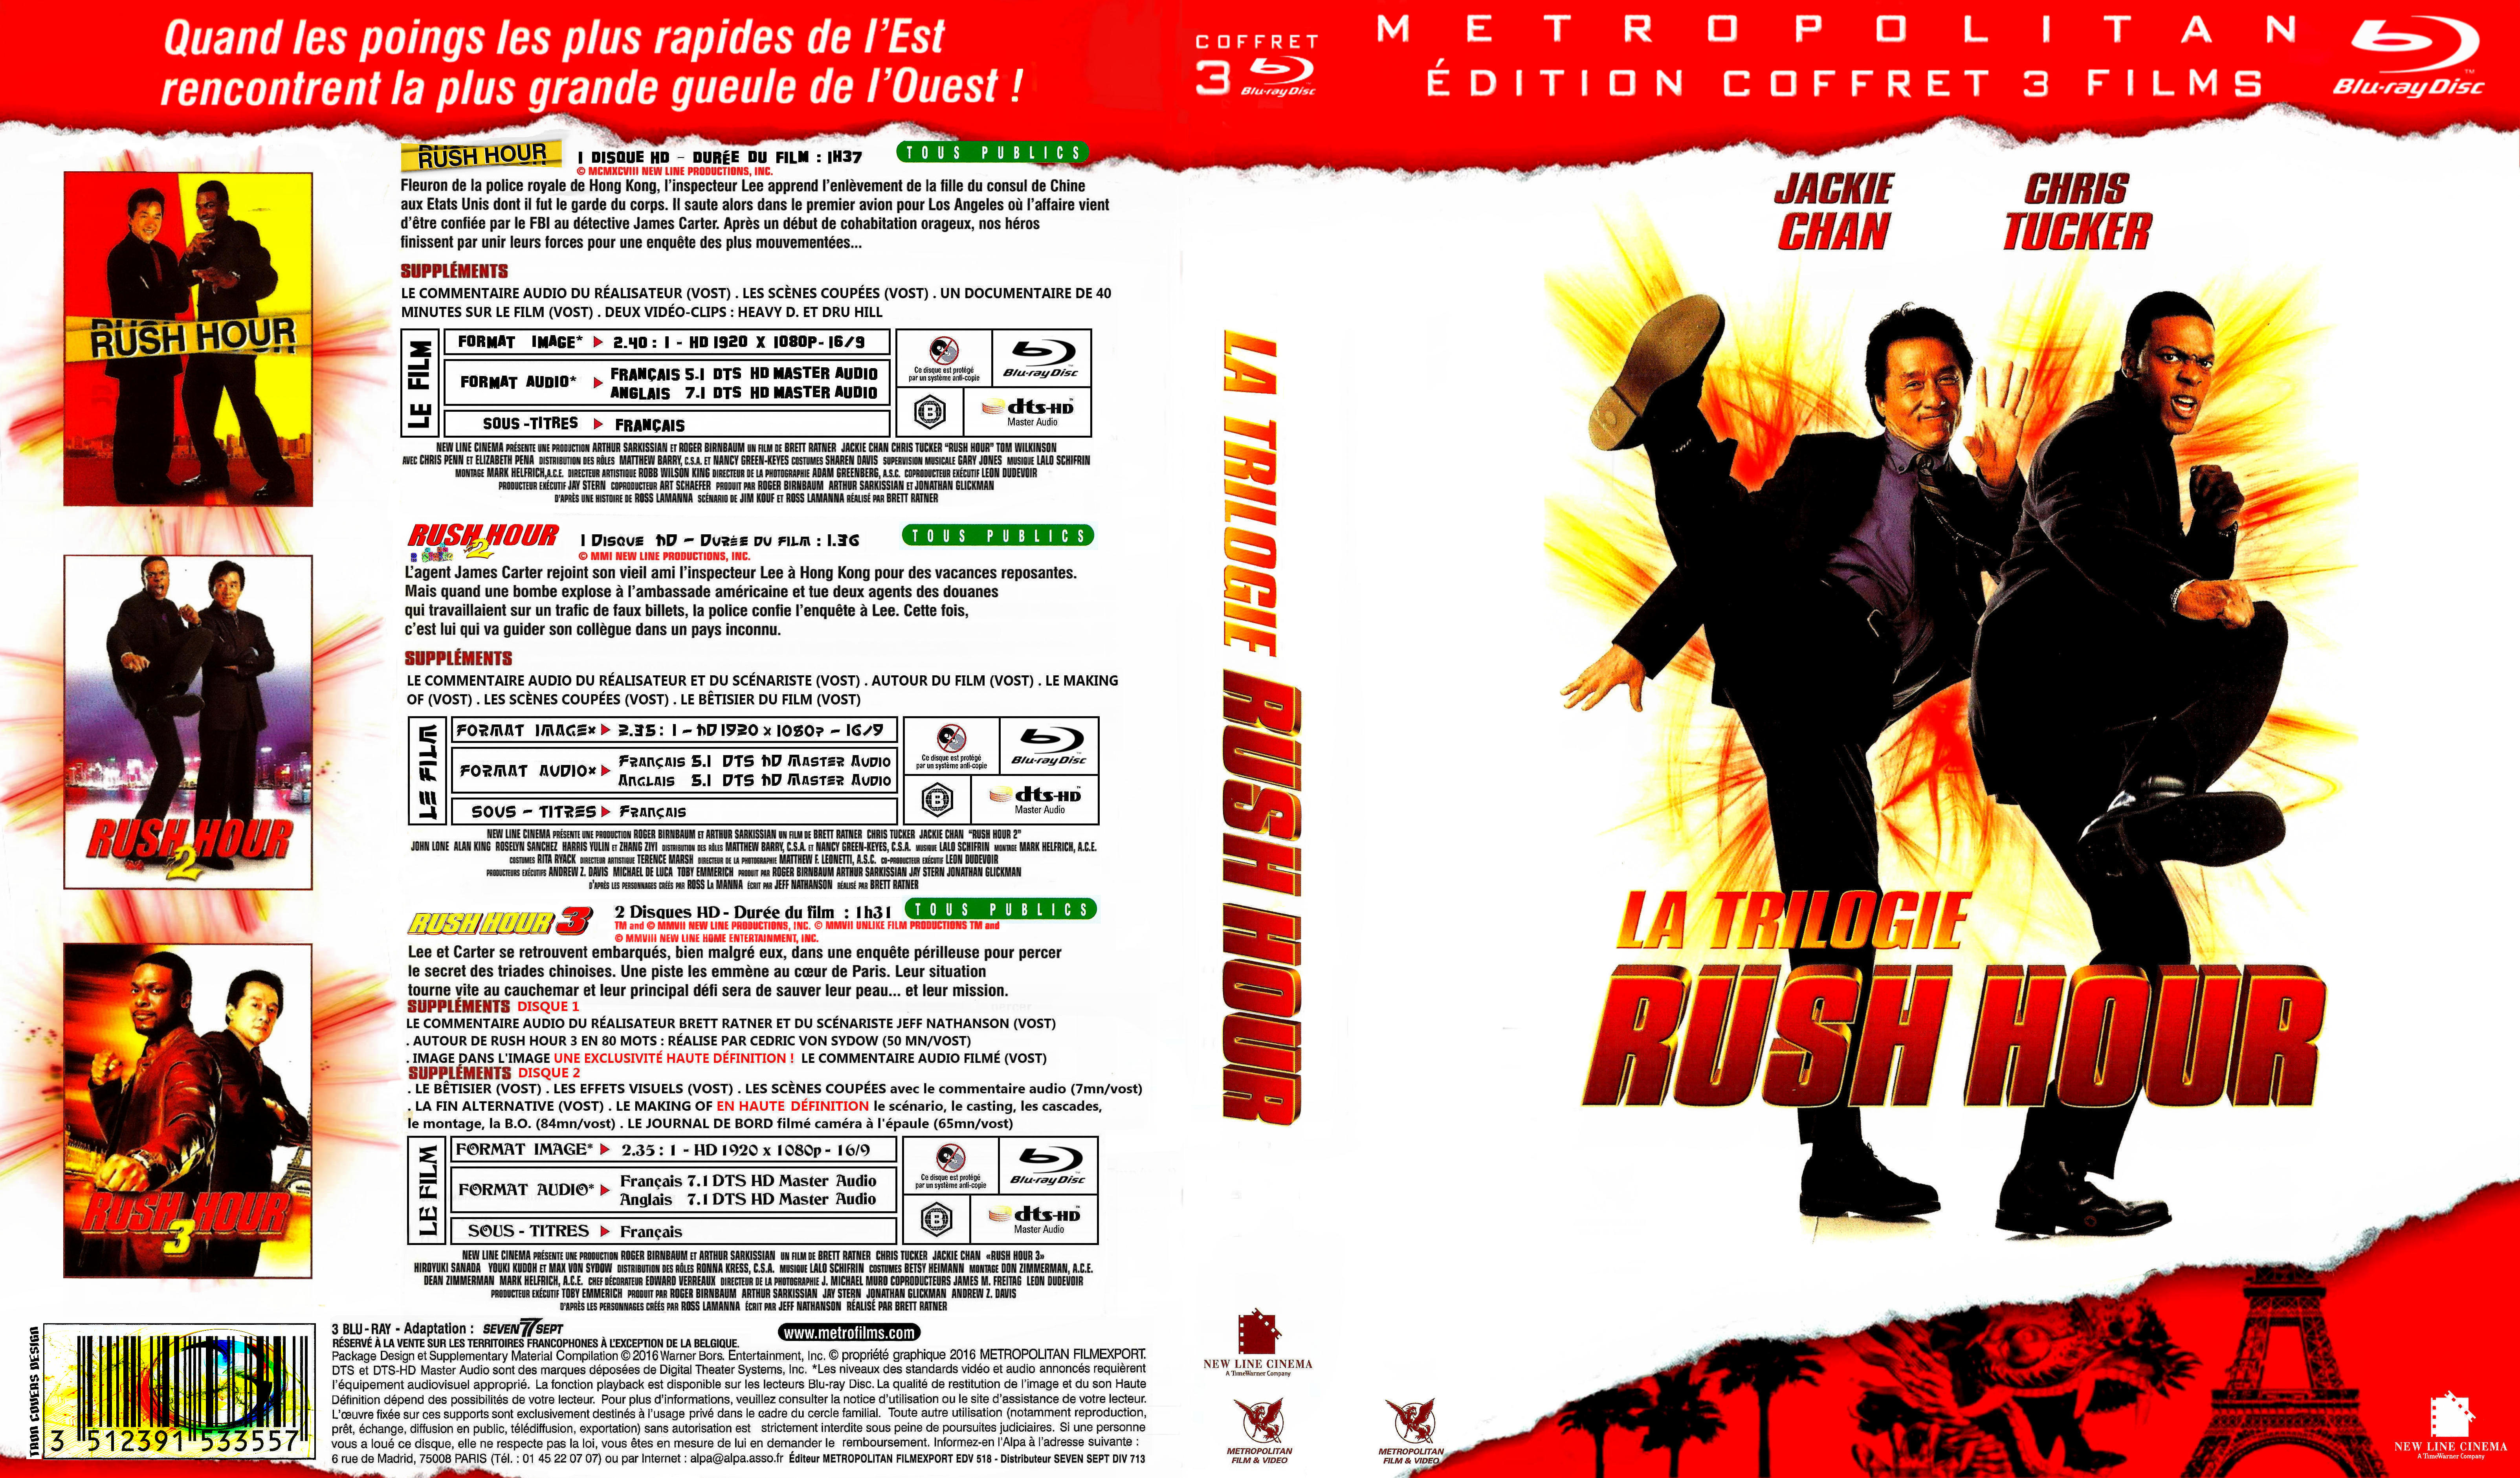 Jaquette DVD Rush hour Coffret trilogie custom (BLU-RAY)